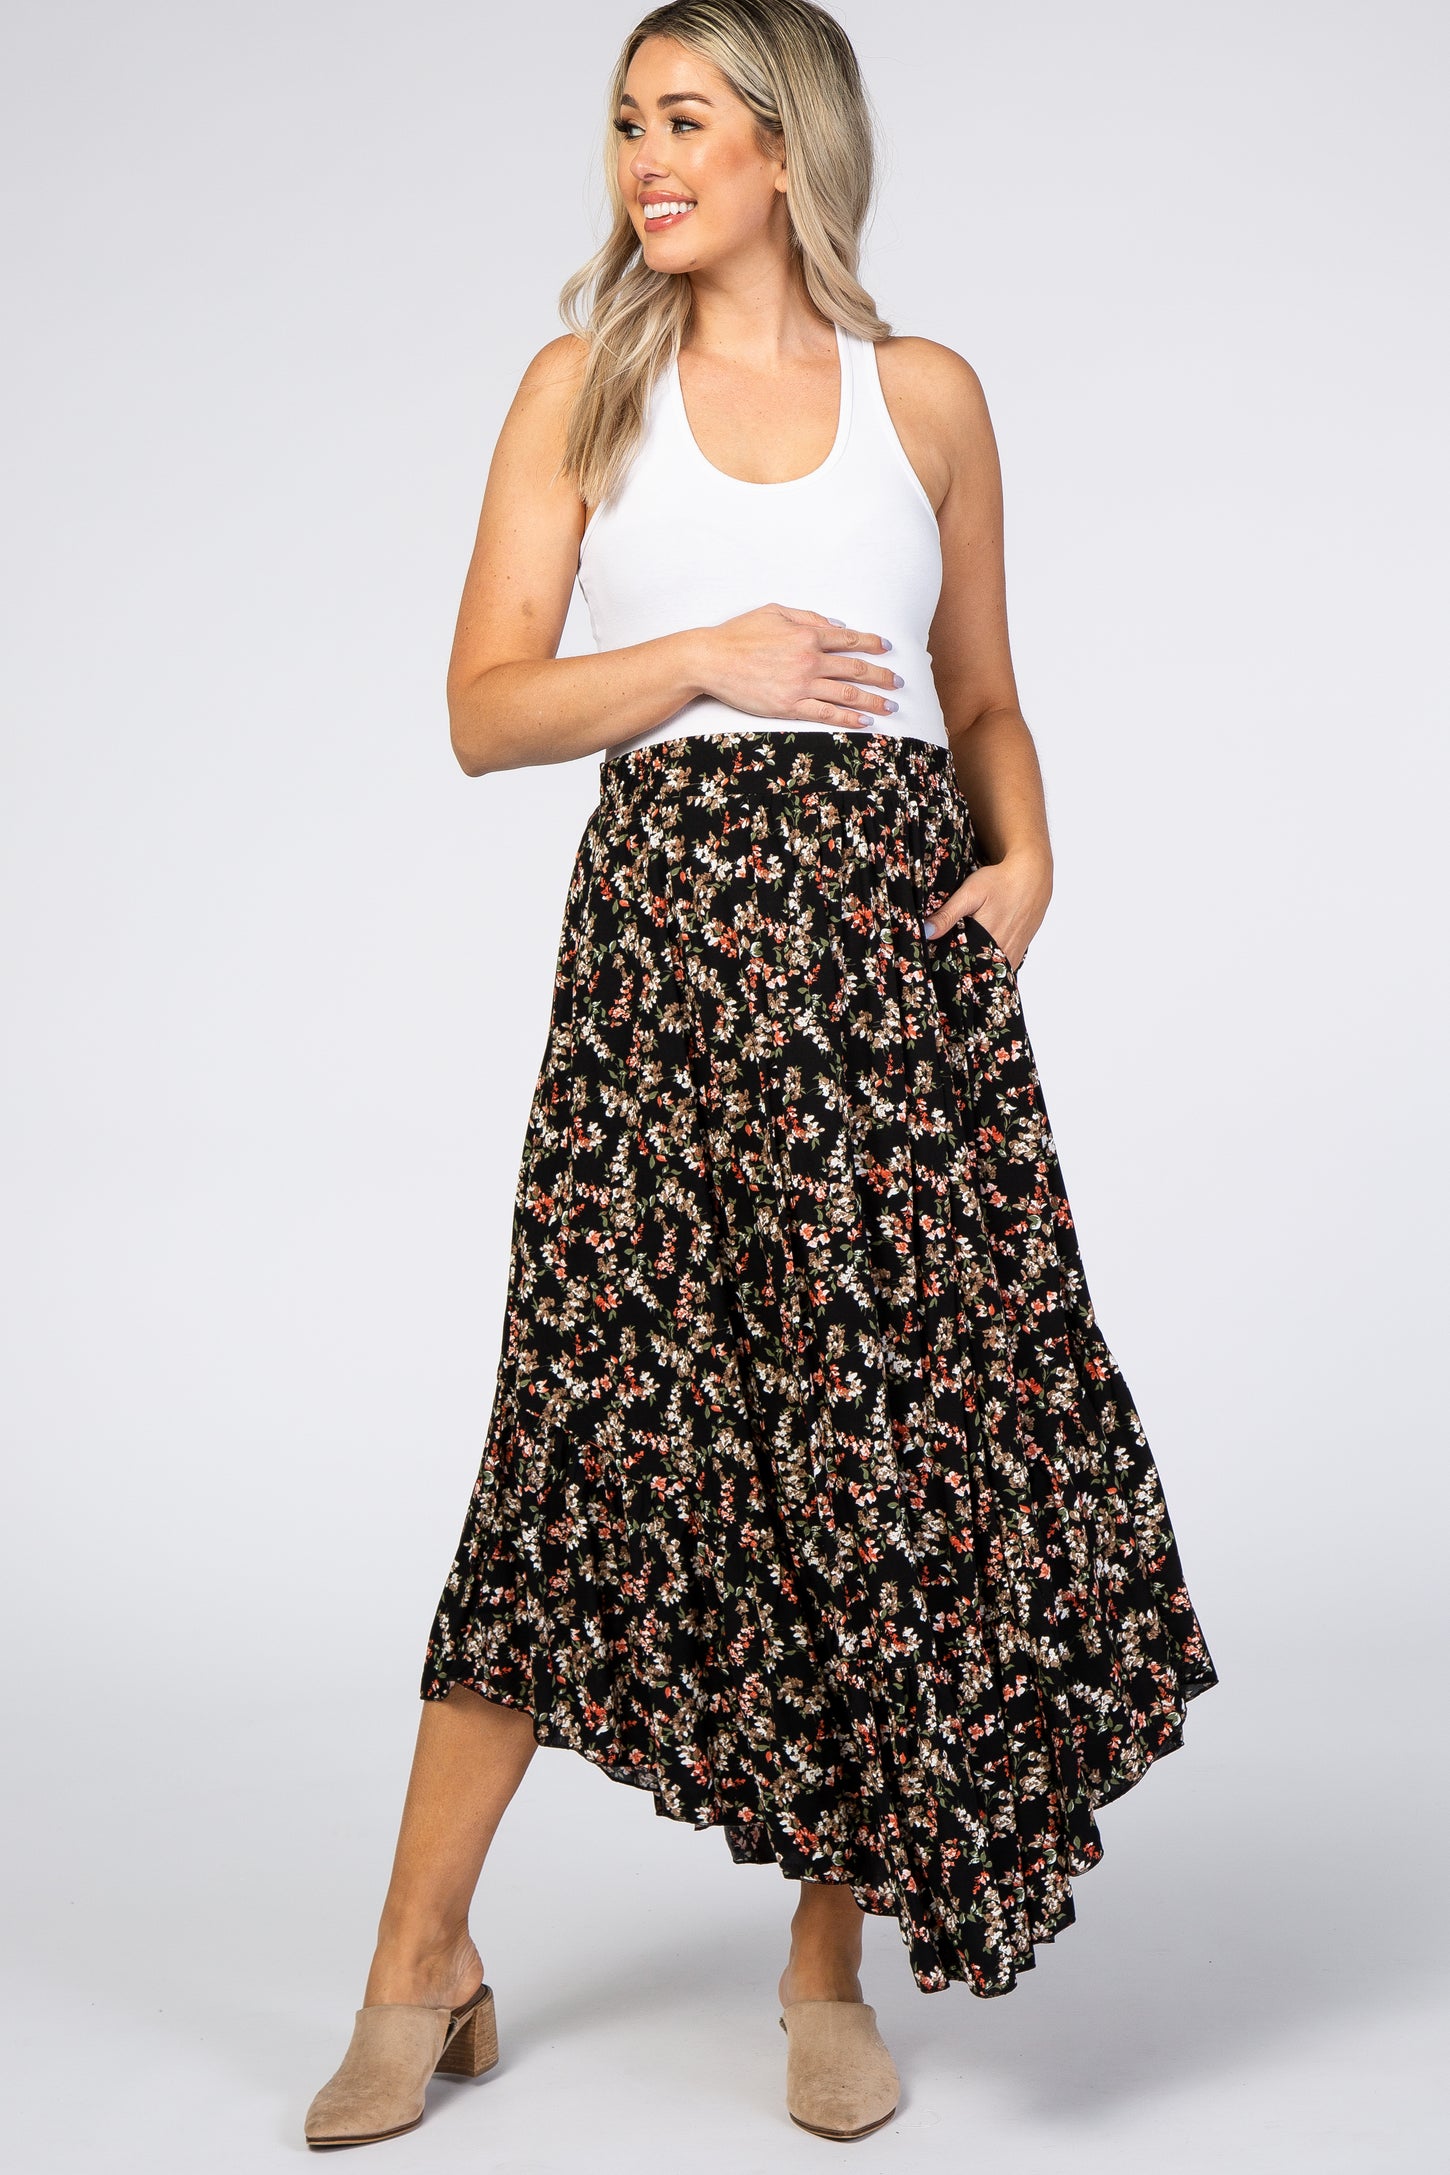 Black Floral Ruffle Maternity Skirt– PinkBlush